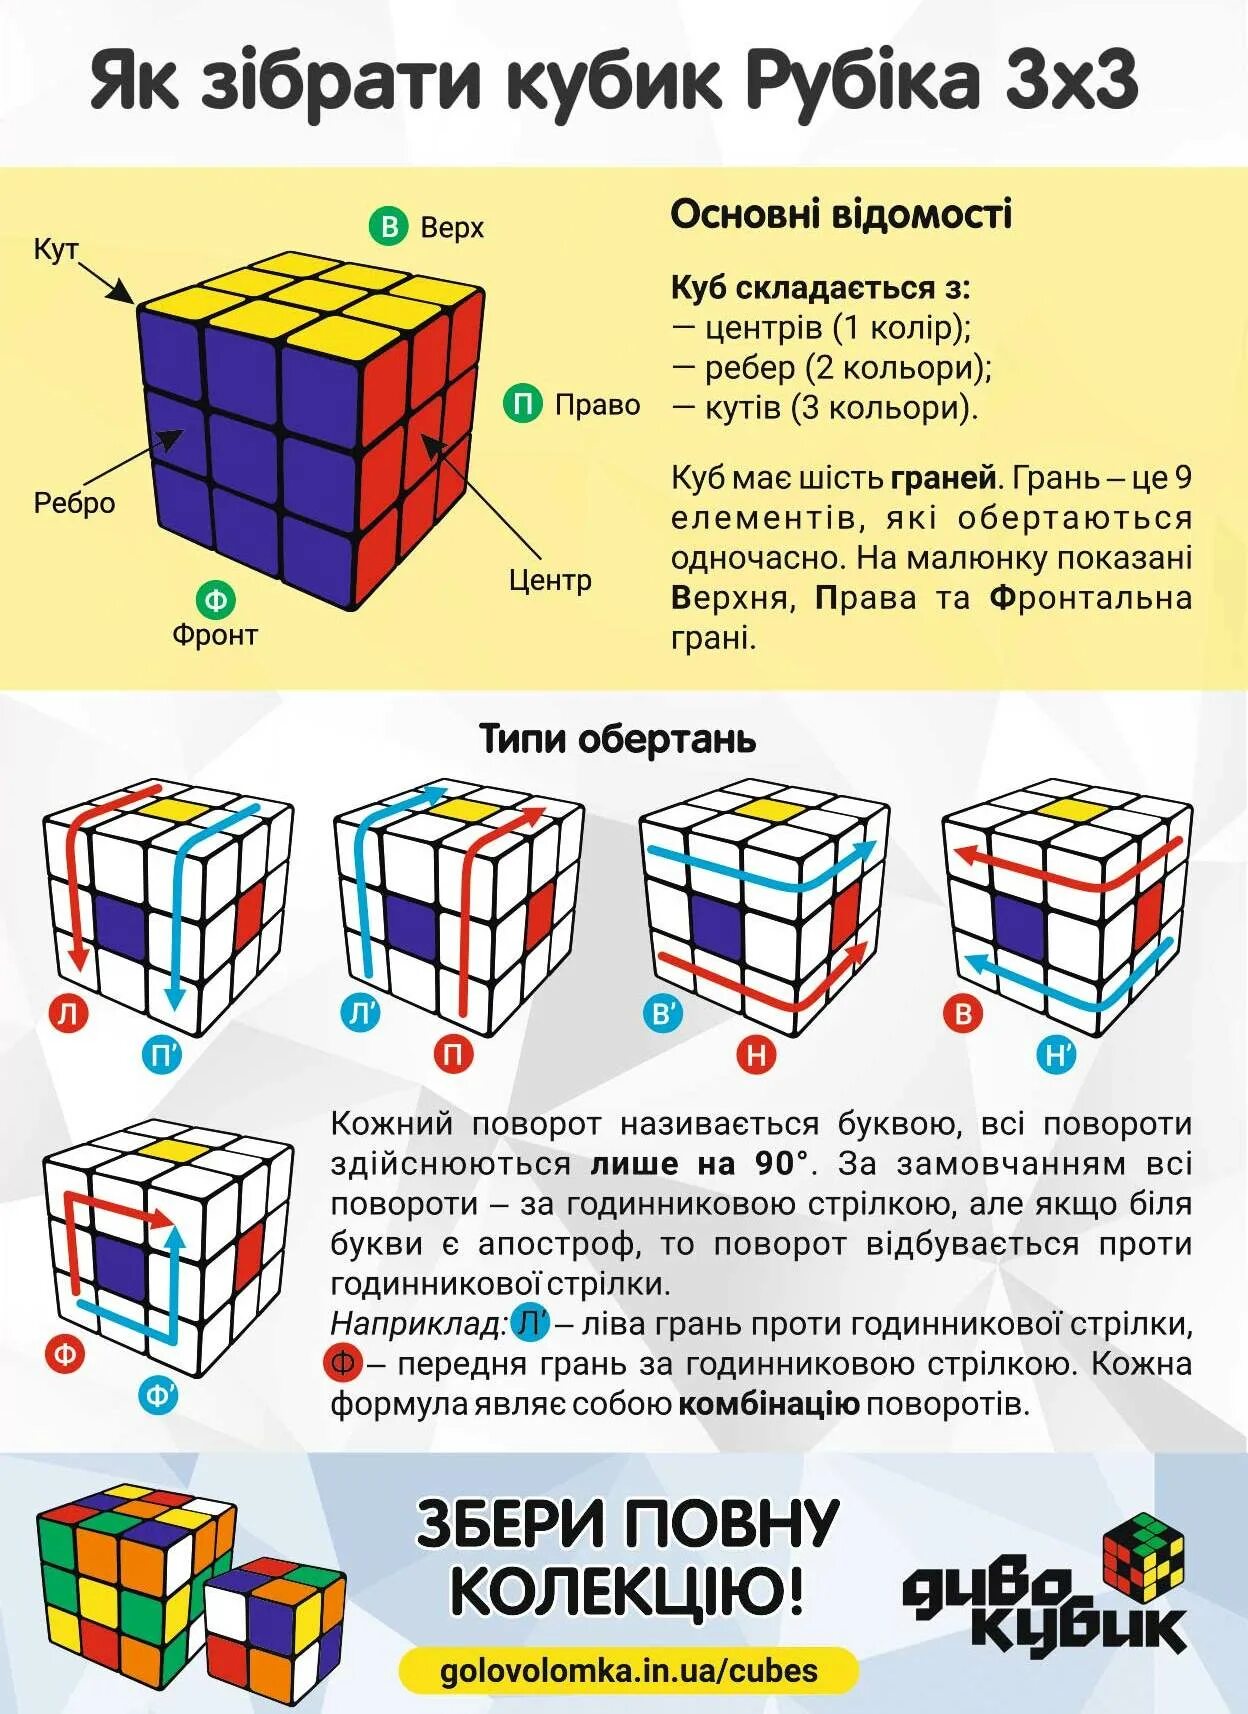 Рубик инструкция. Алгоритмы по сборке кубика Рубика 3х3 для начинающих. Формулы кубика Рубика 3х3 для начинающих. Комбинации кубика Рубика 3х3. Кубик-Рубика 3х3 сборка пошагово.